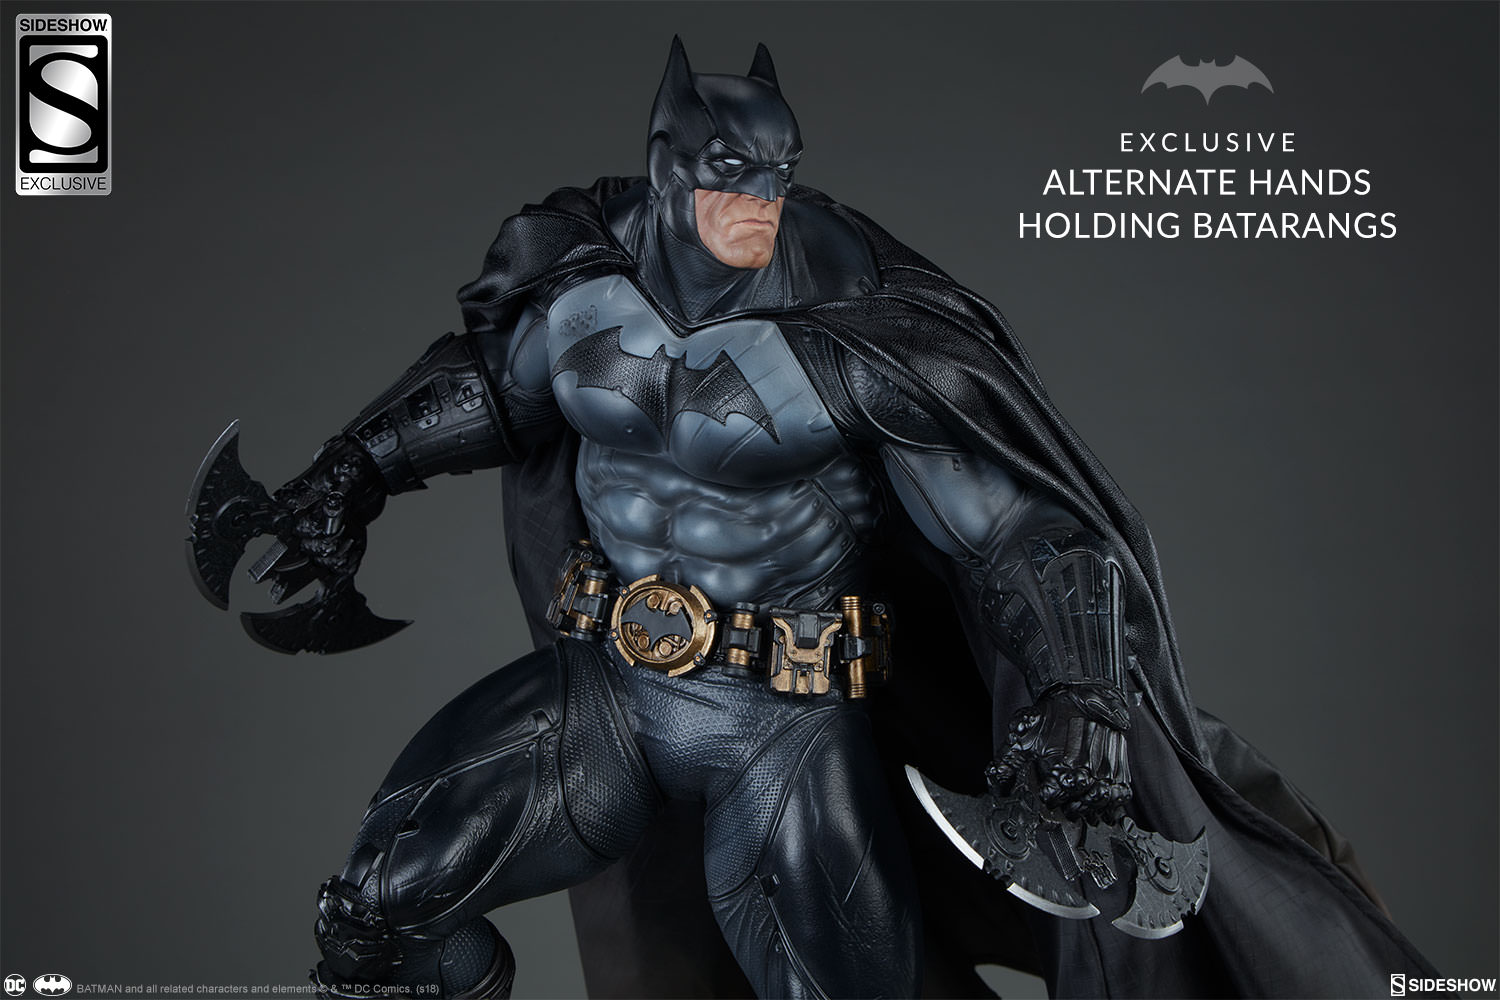 dc-comics-batman-premium-format-figure-sideshow-3005421-01.jpg